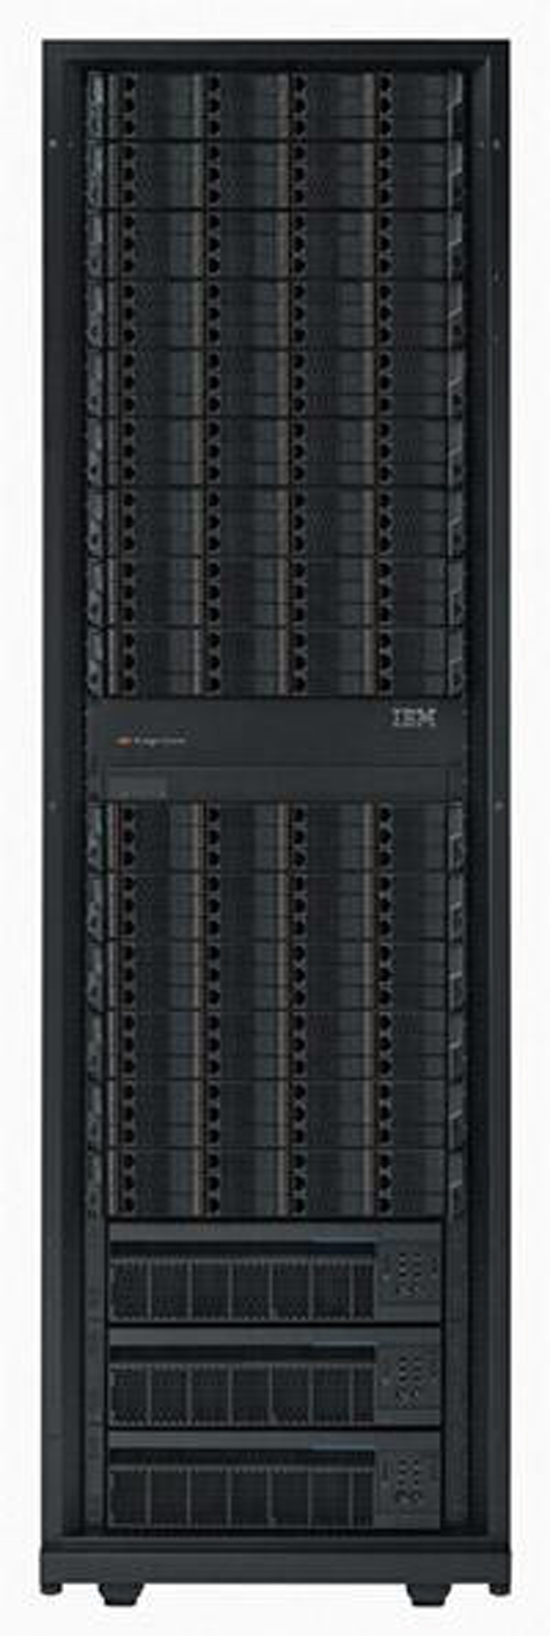 IBM XIV存储系统